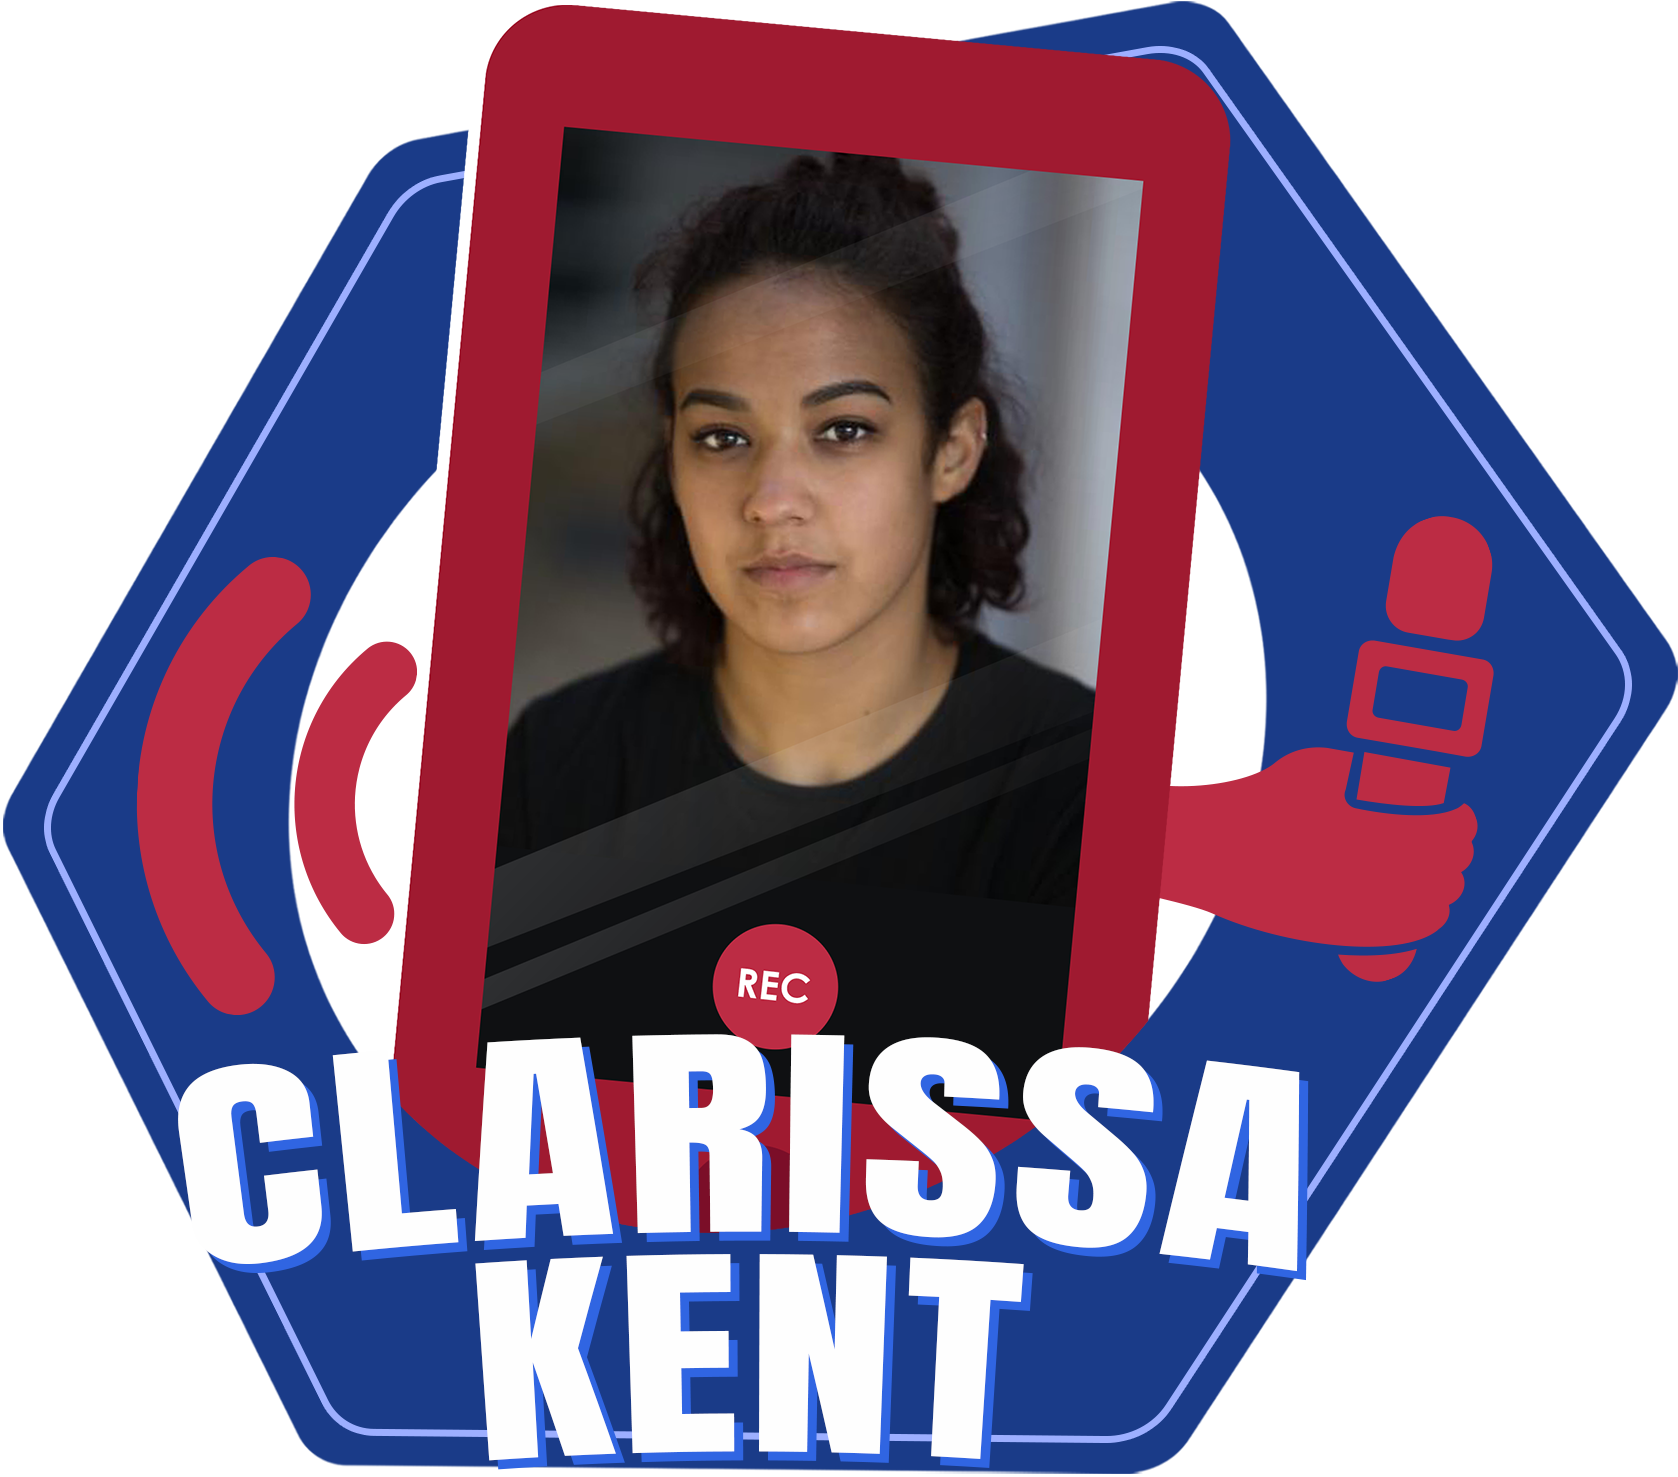 Clarissa-Website-Character-Badge.png